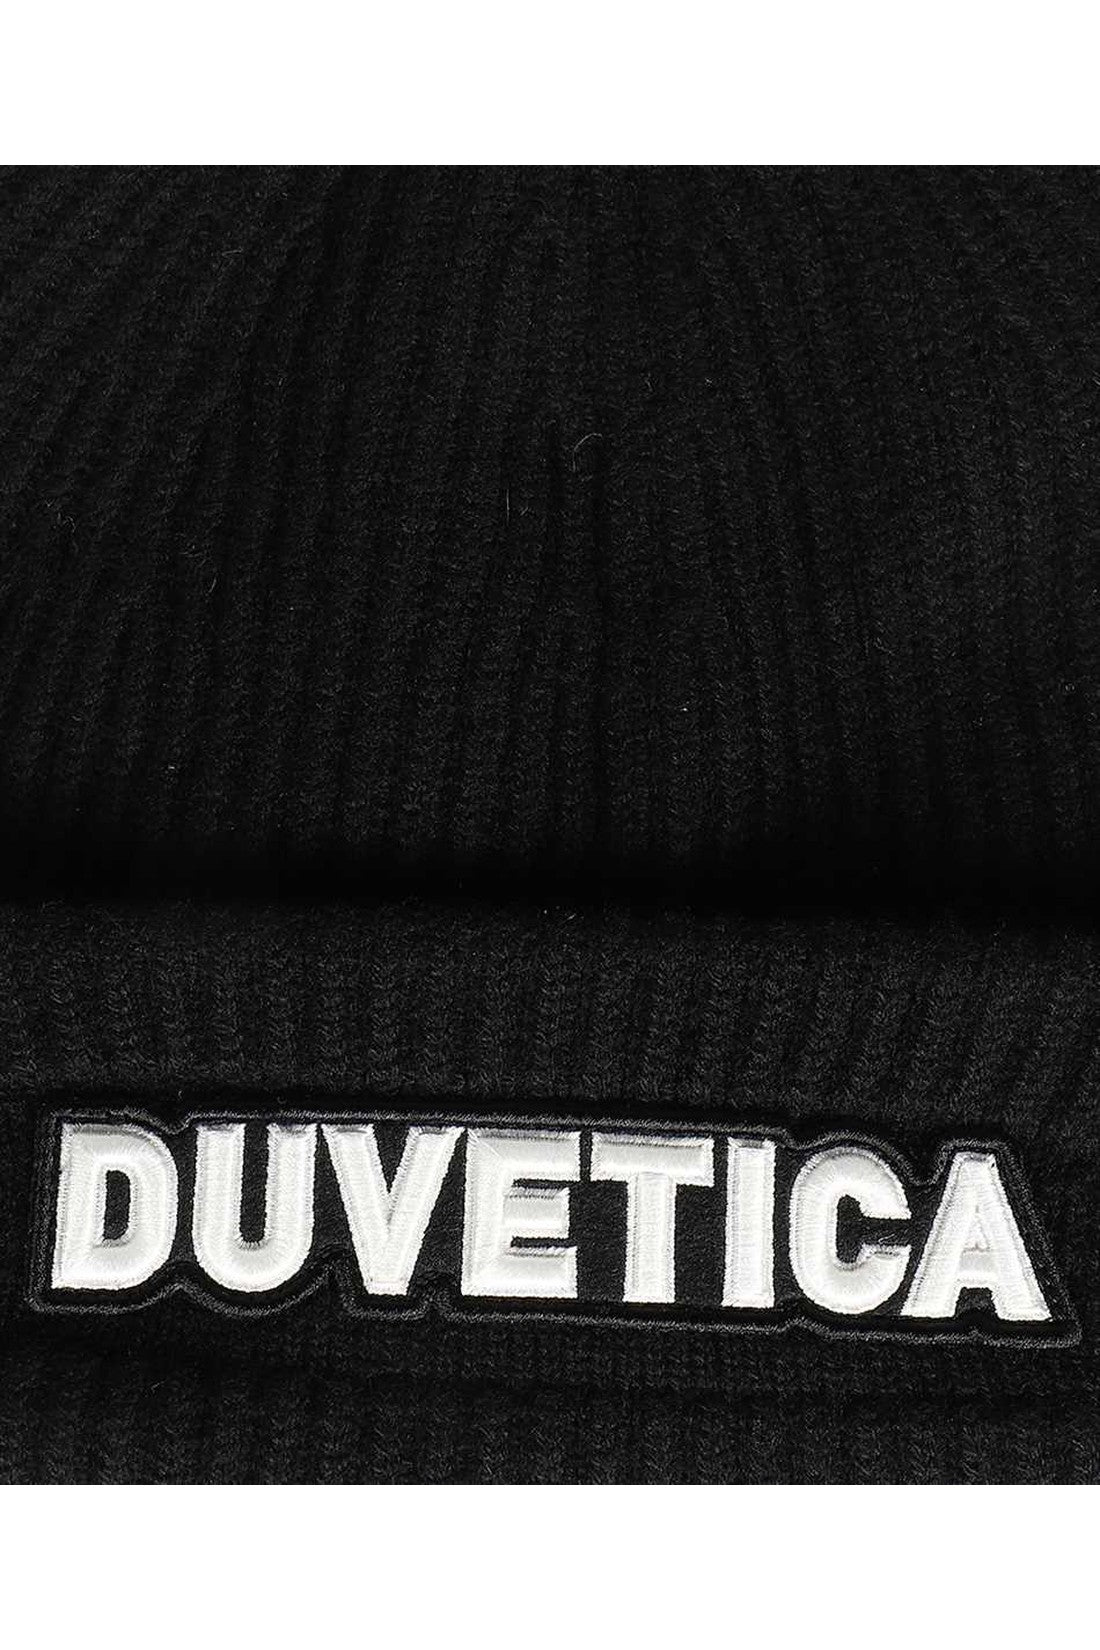 Duvetica-OUTLET-SALE-Knitted-beanie-Mutzen-TU-ARCHIVE-COLLECTION-3.jpg